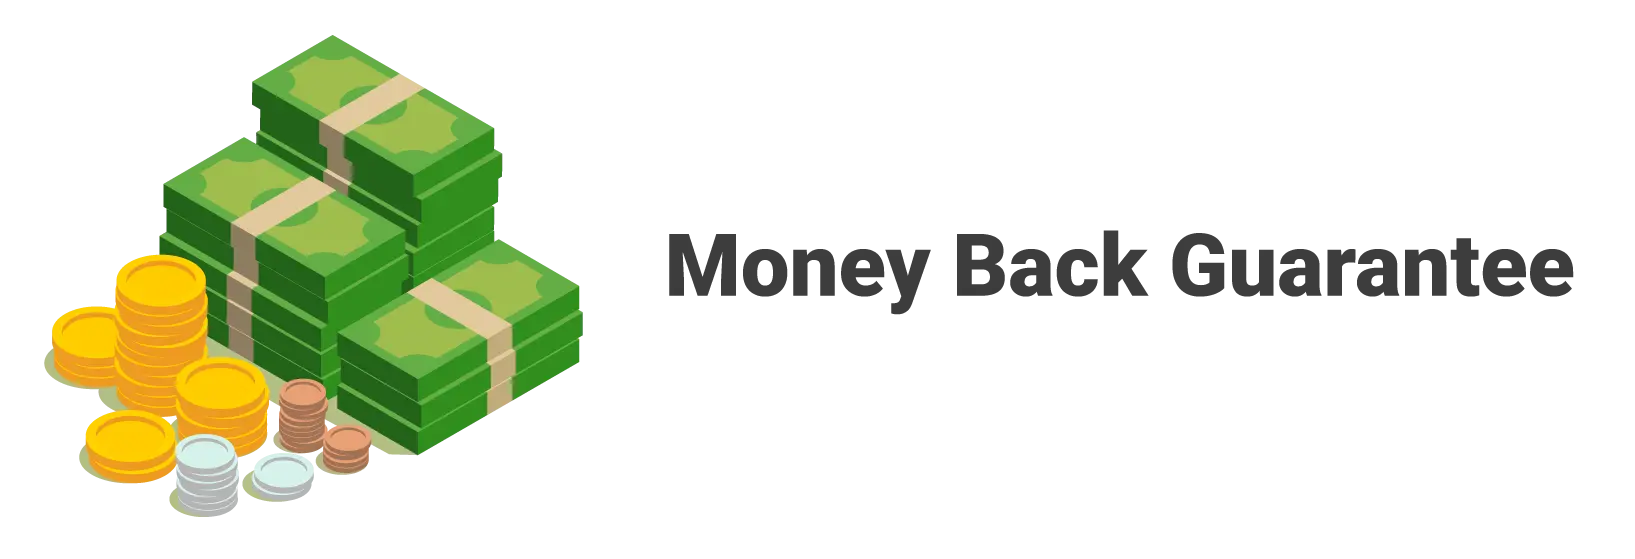 money back guarantee hosting